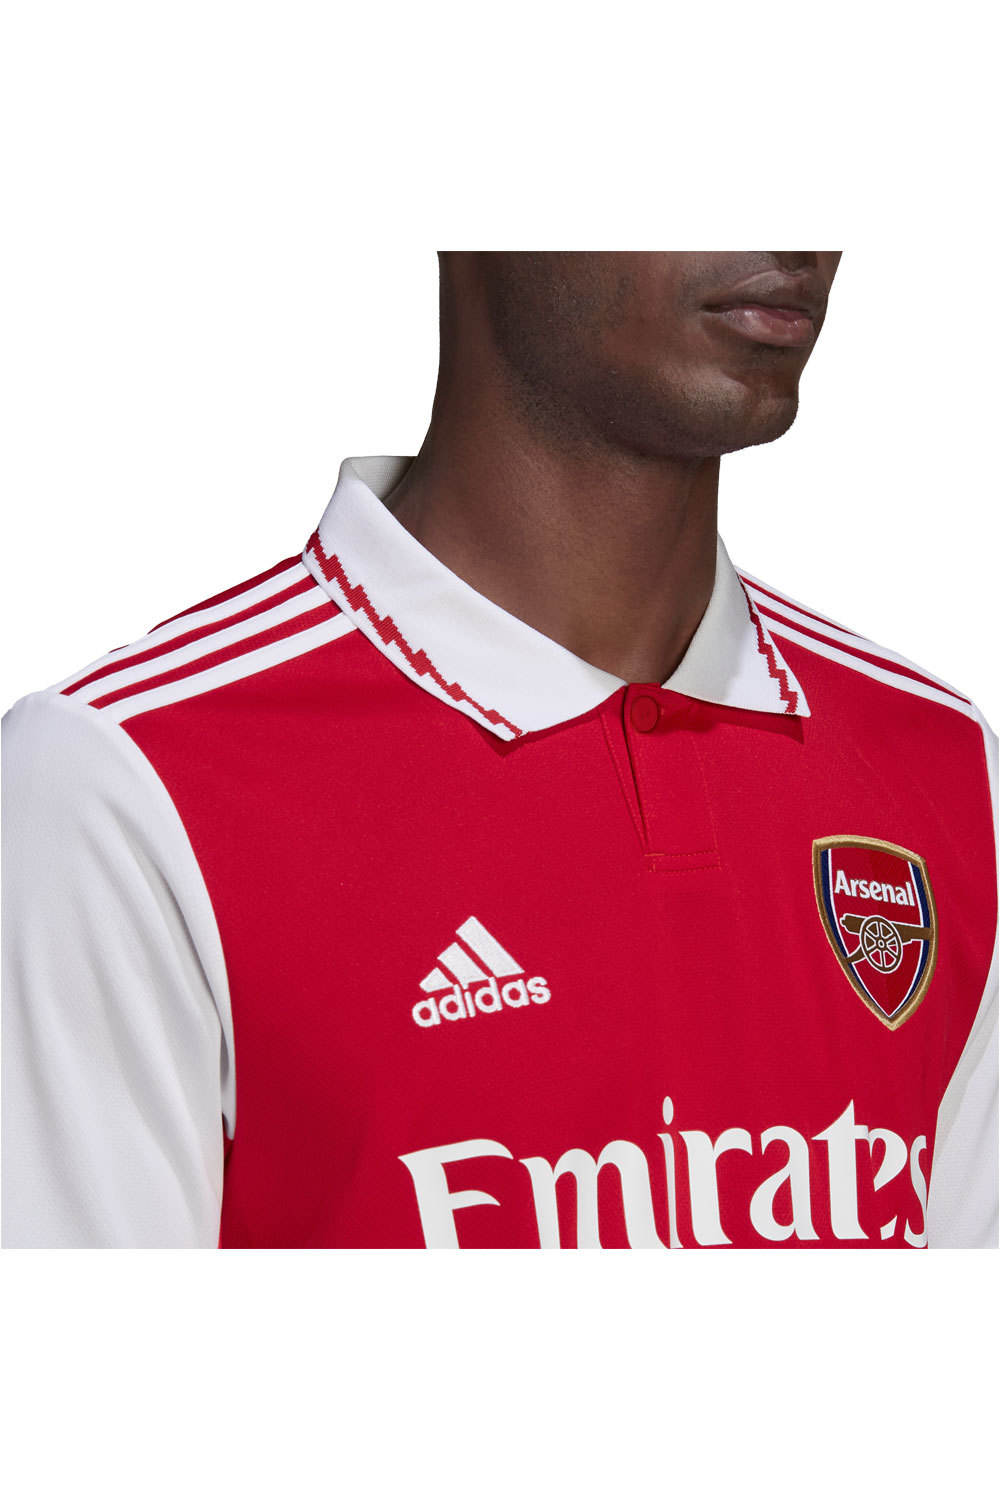 adidas camiseta de fútbol oficiales Arsenal 03